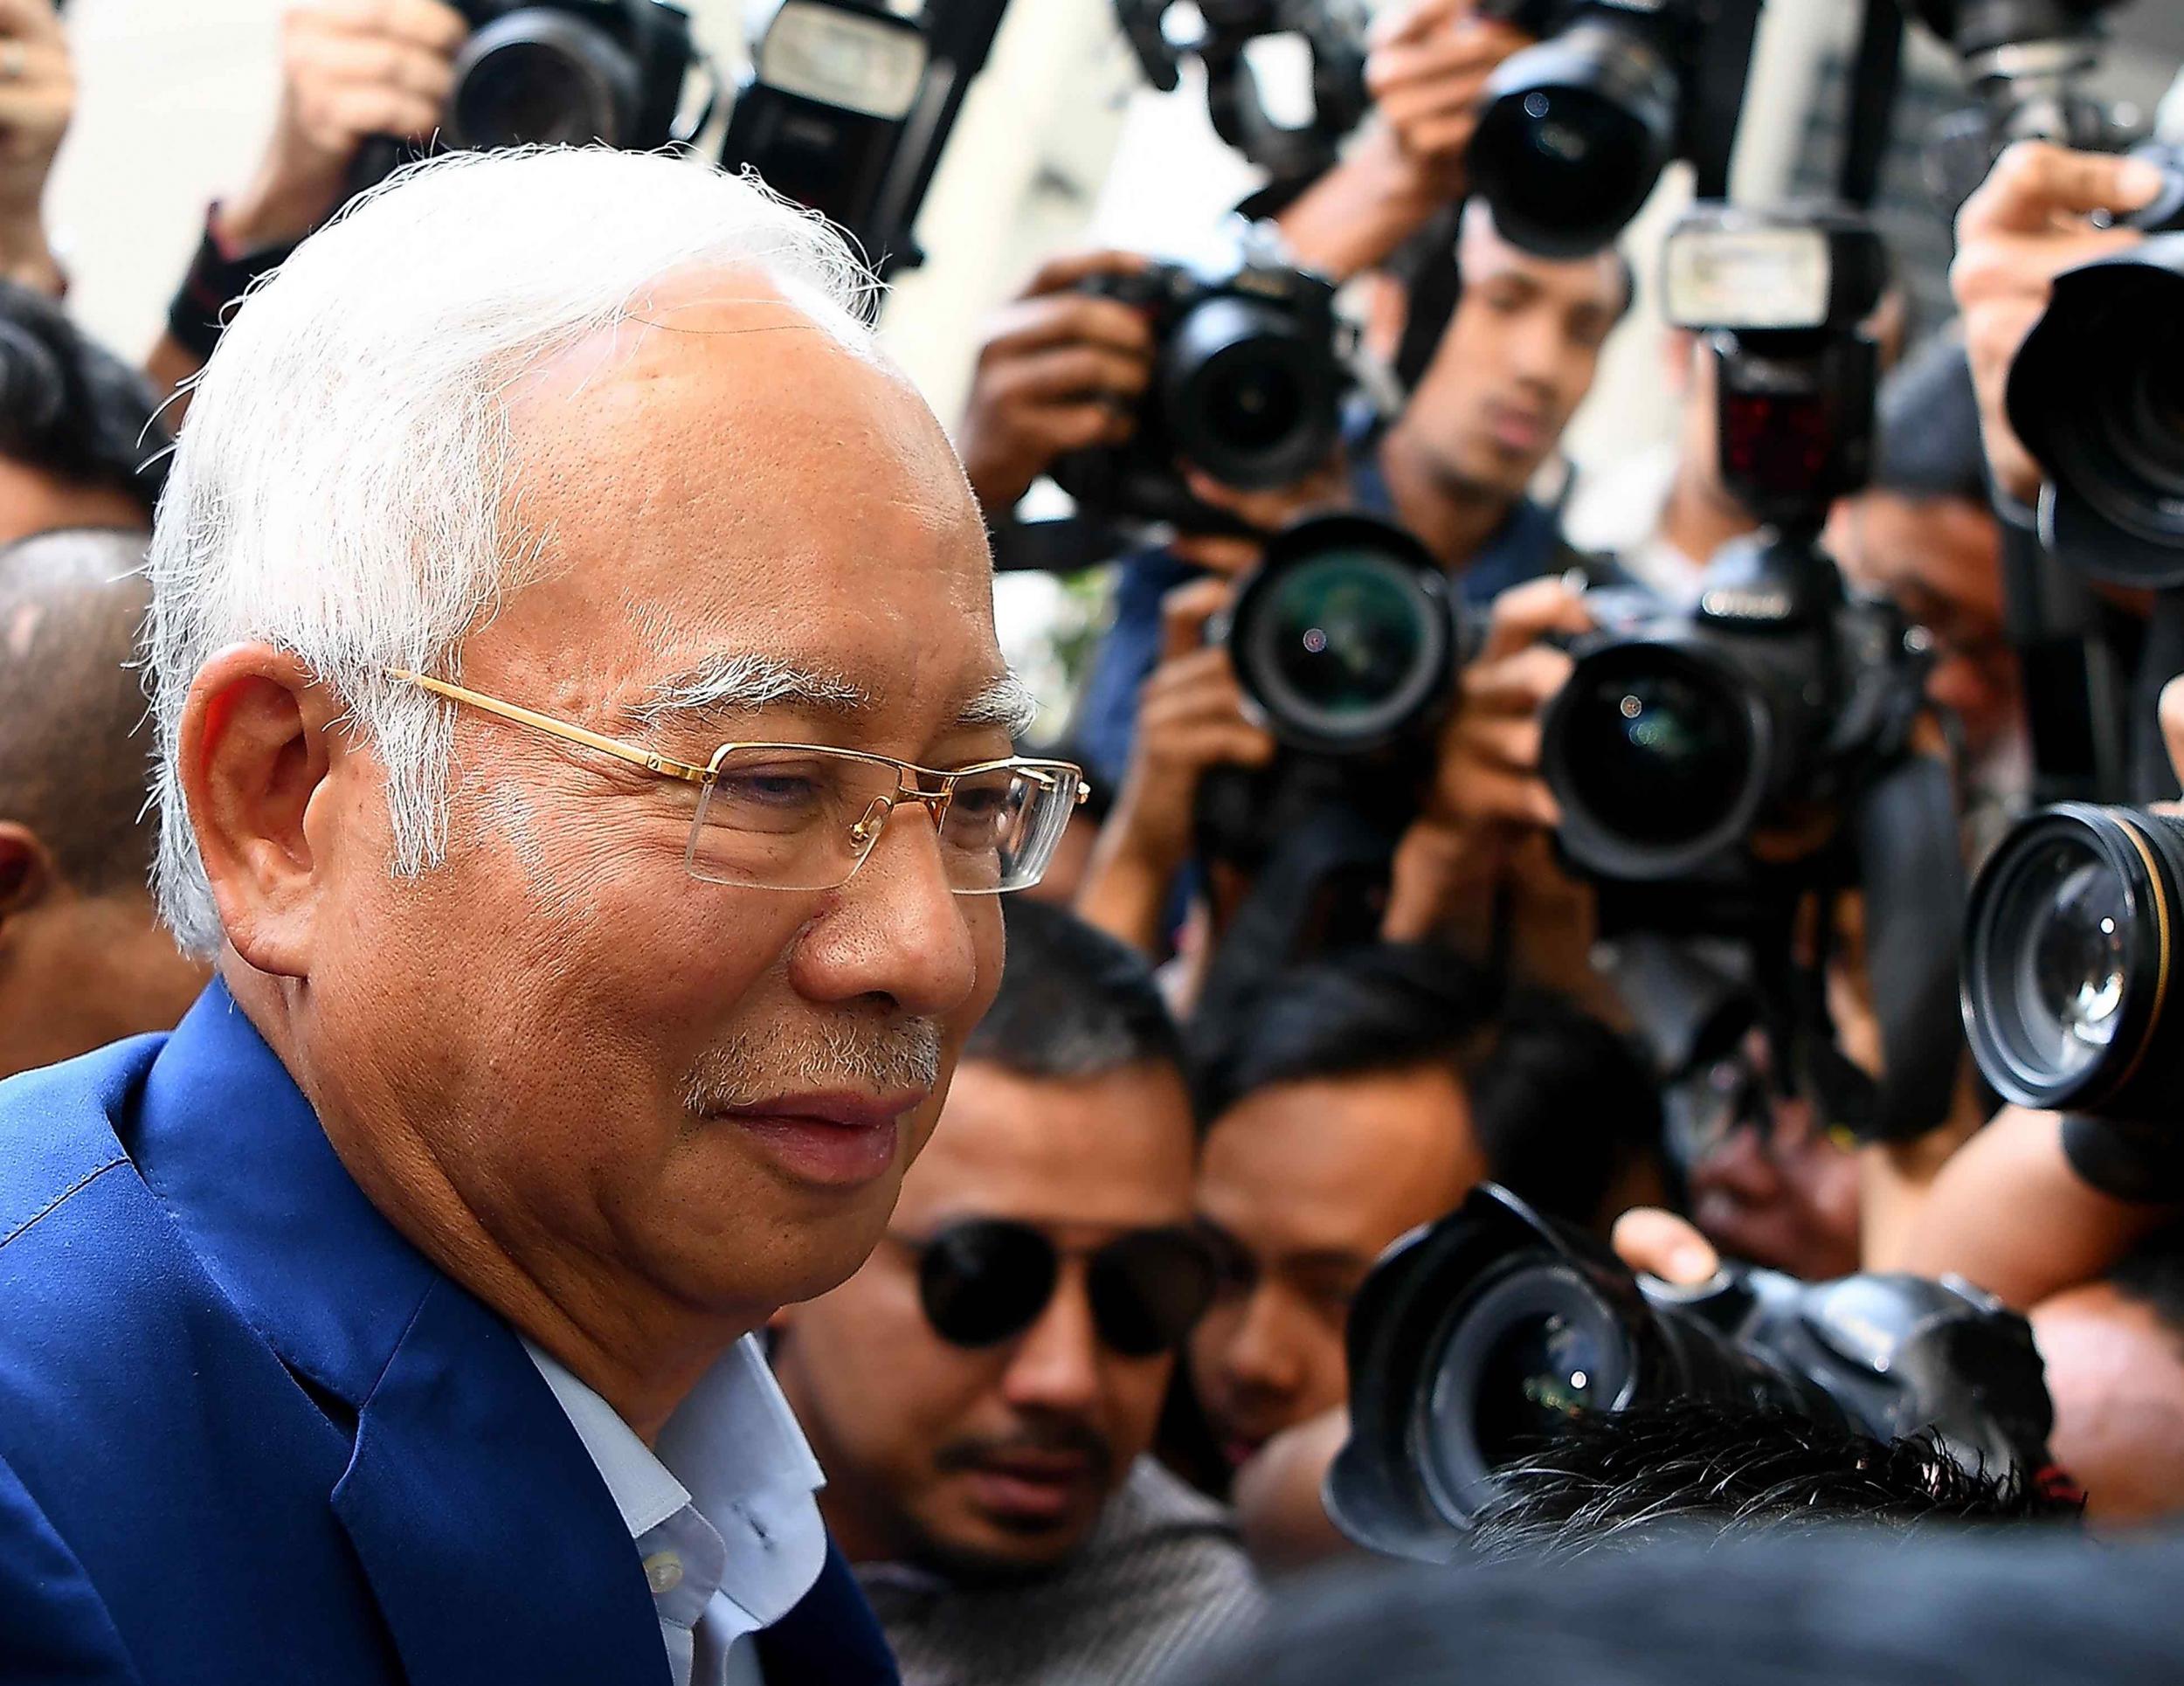 Former prime minister Najib Razak arrives at the Malaysian Anti-Corruption Commission (MACC) office